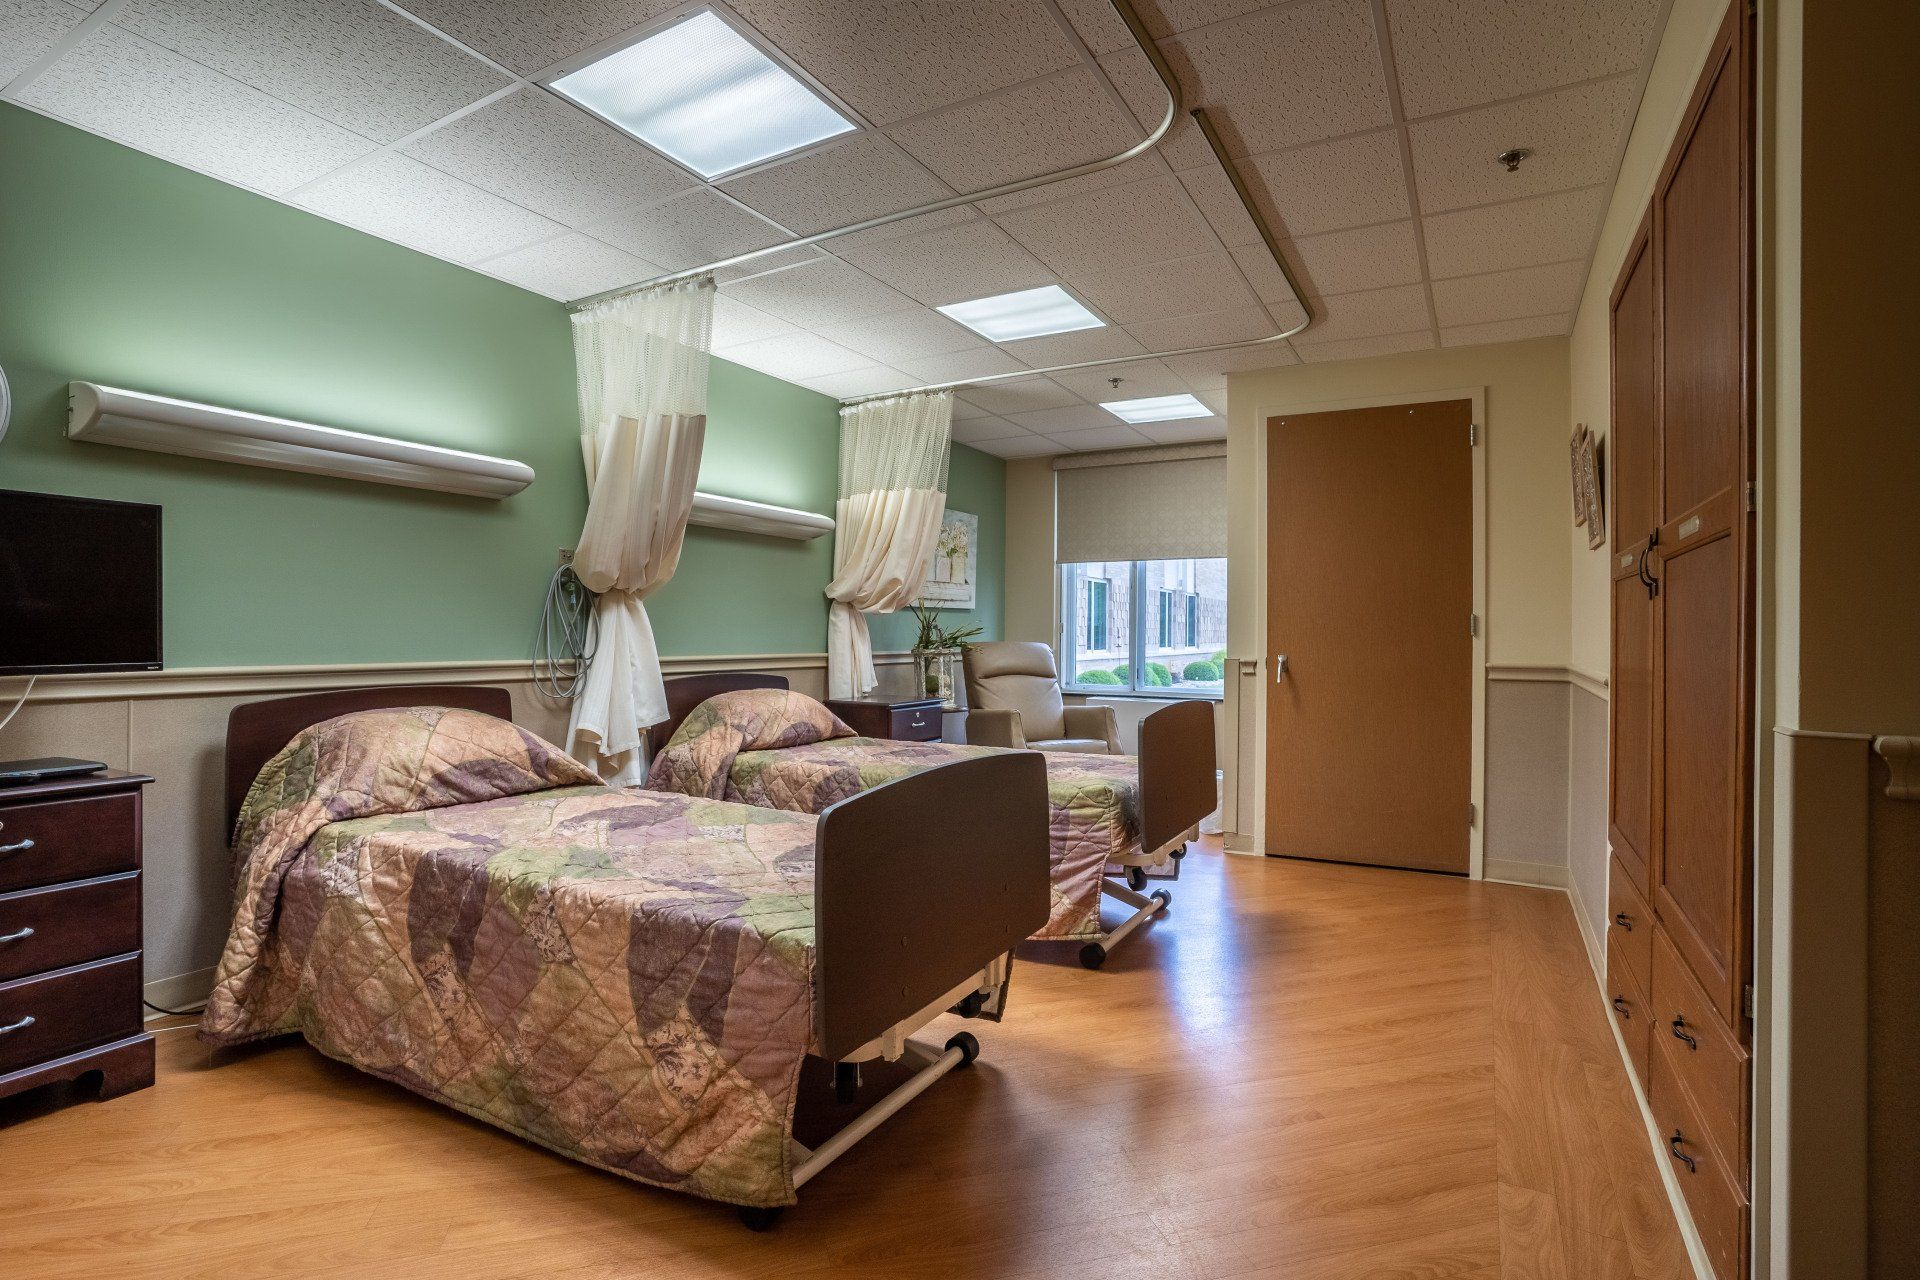 Semi-Private Room at Lenawee Medical Care Facility in Adrian, MI